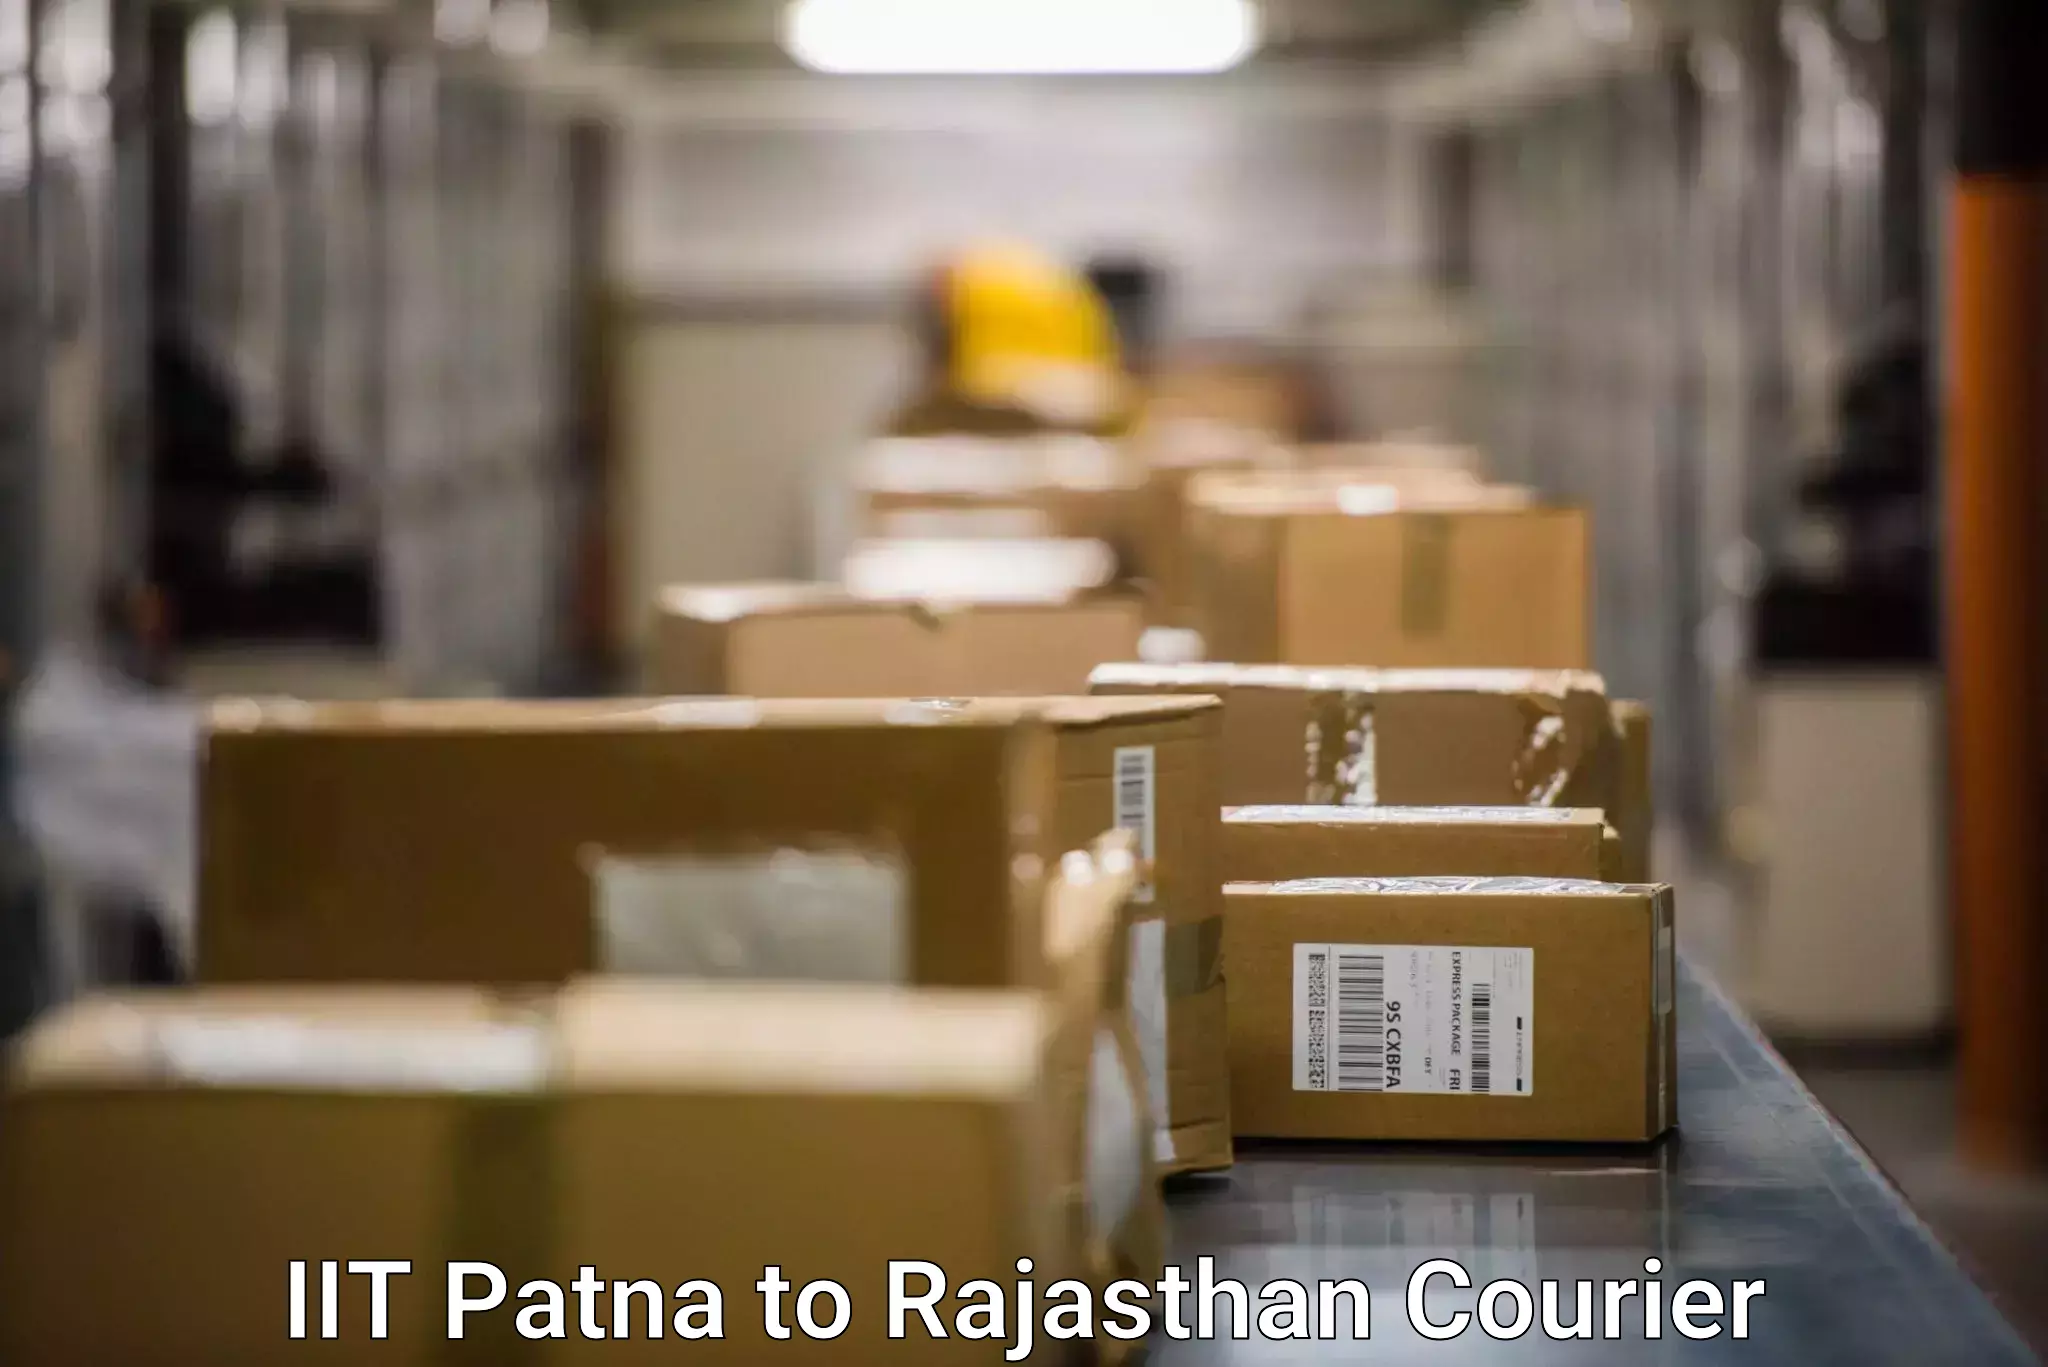 Urgent courier needs IIT Patna to Rajasthan